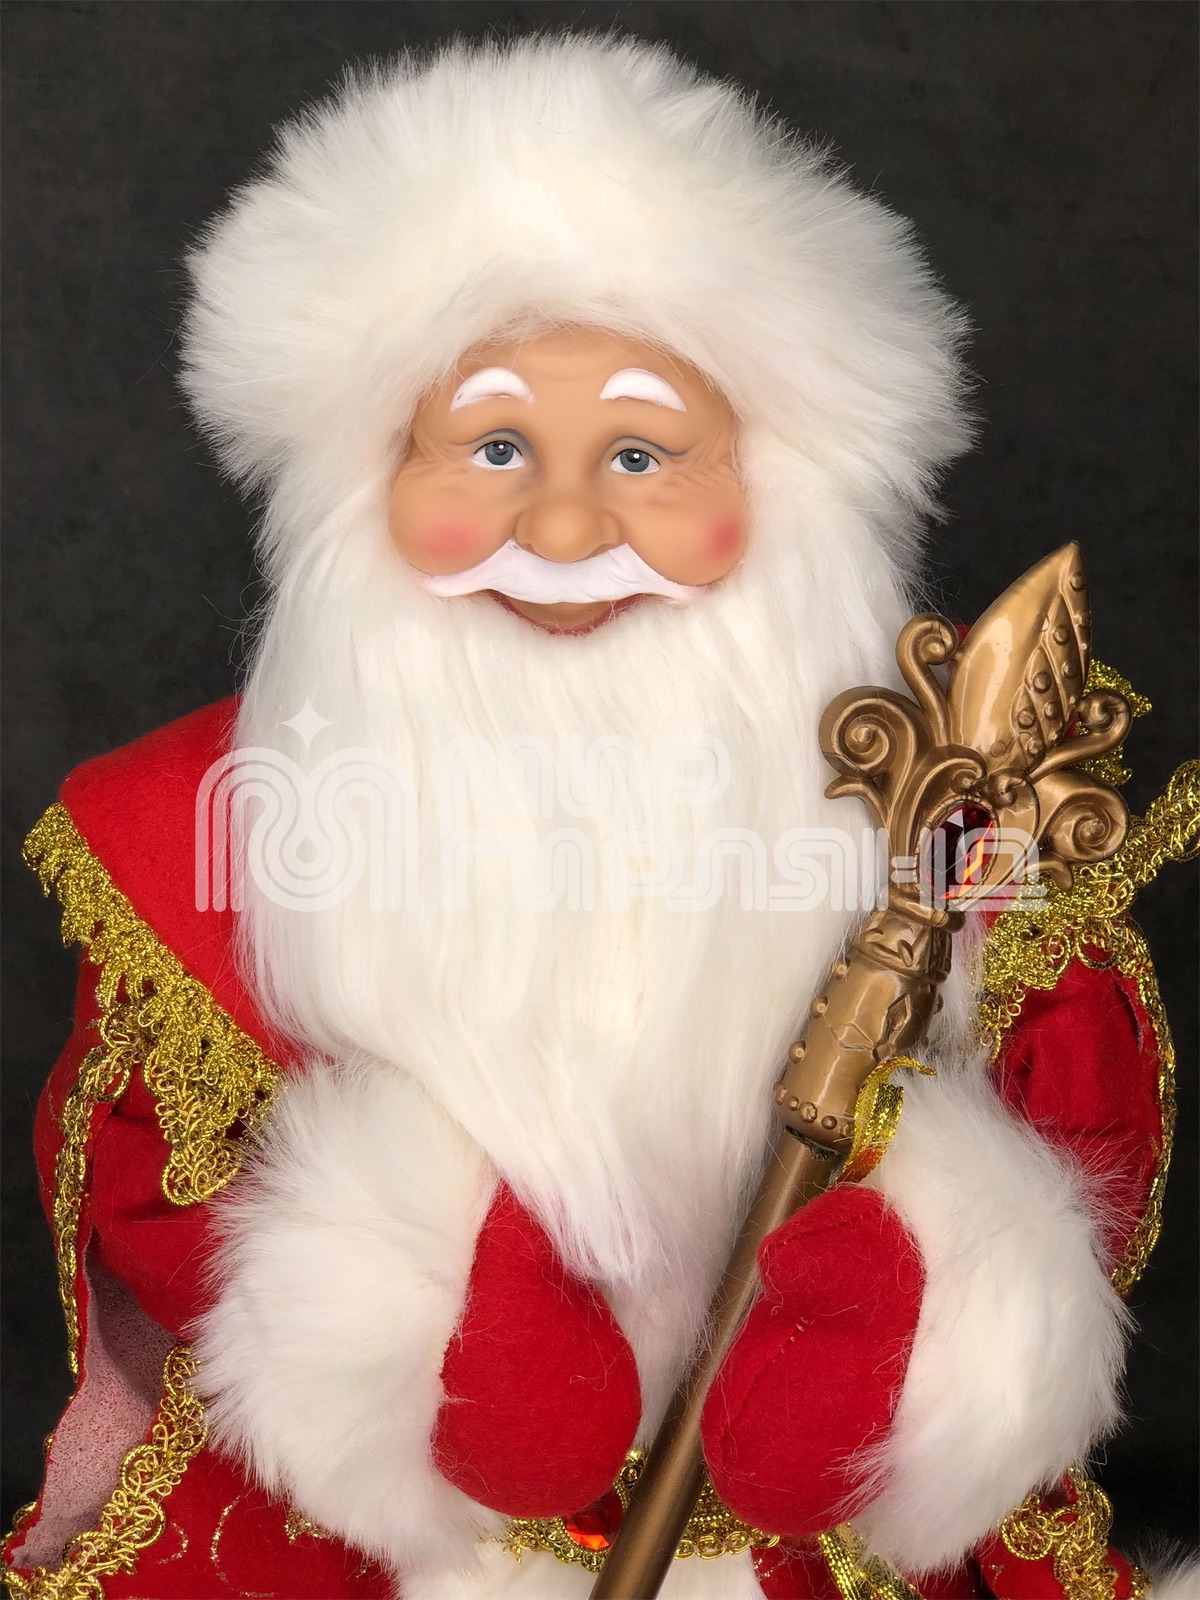 Конфетница муз. "Дед Мороз с мешком", 50см, крас-зол. наряд(24)